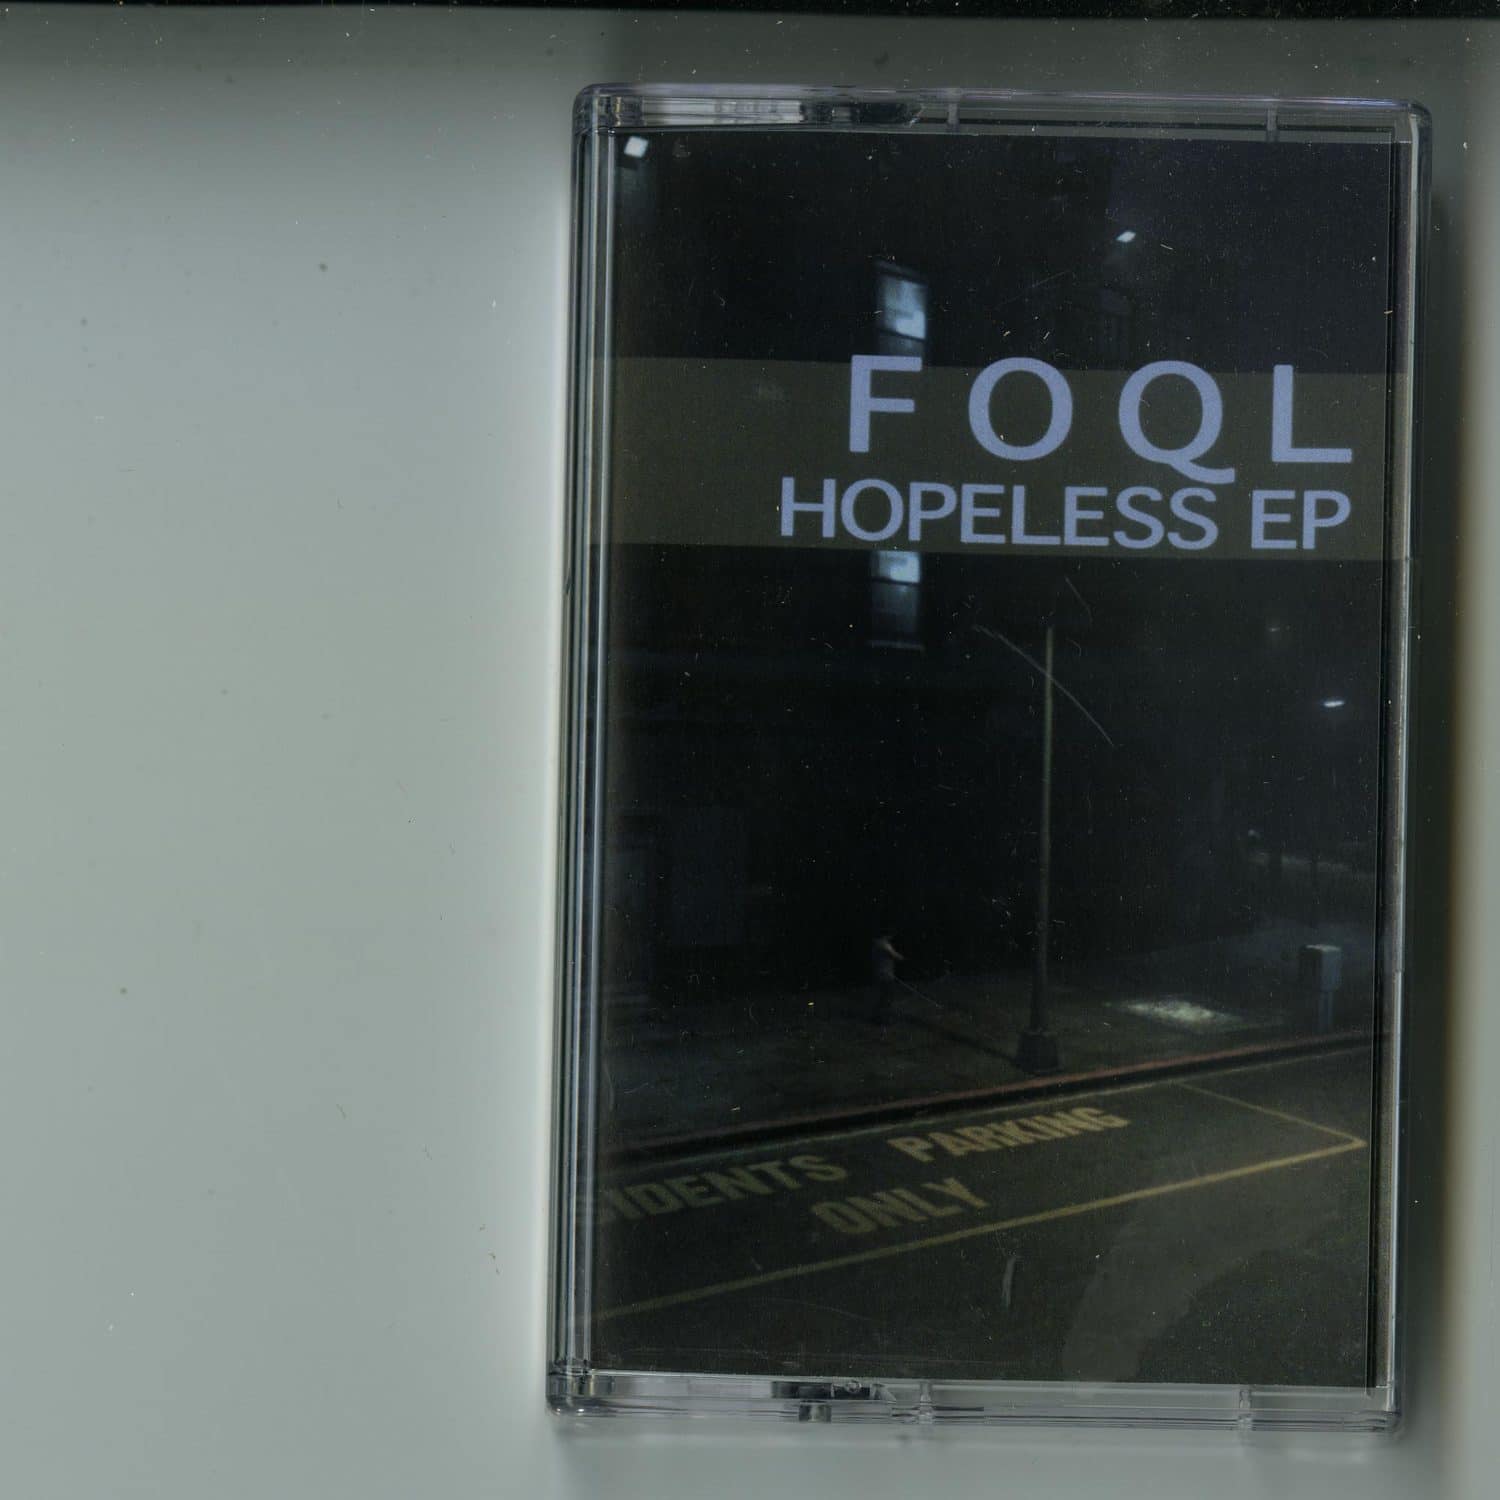 FOQL - HOPELESS EP 